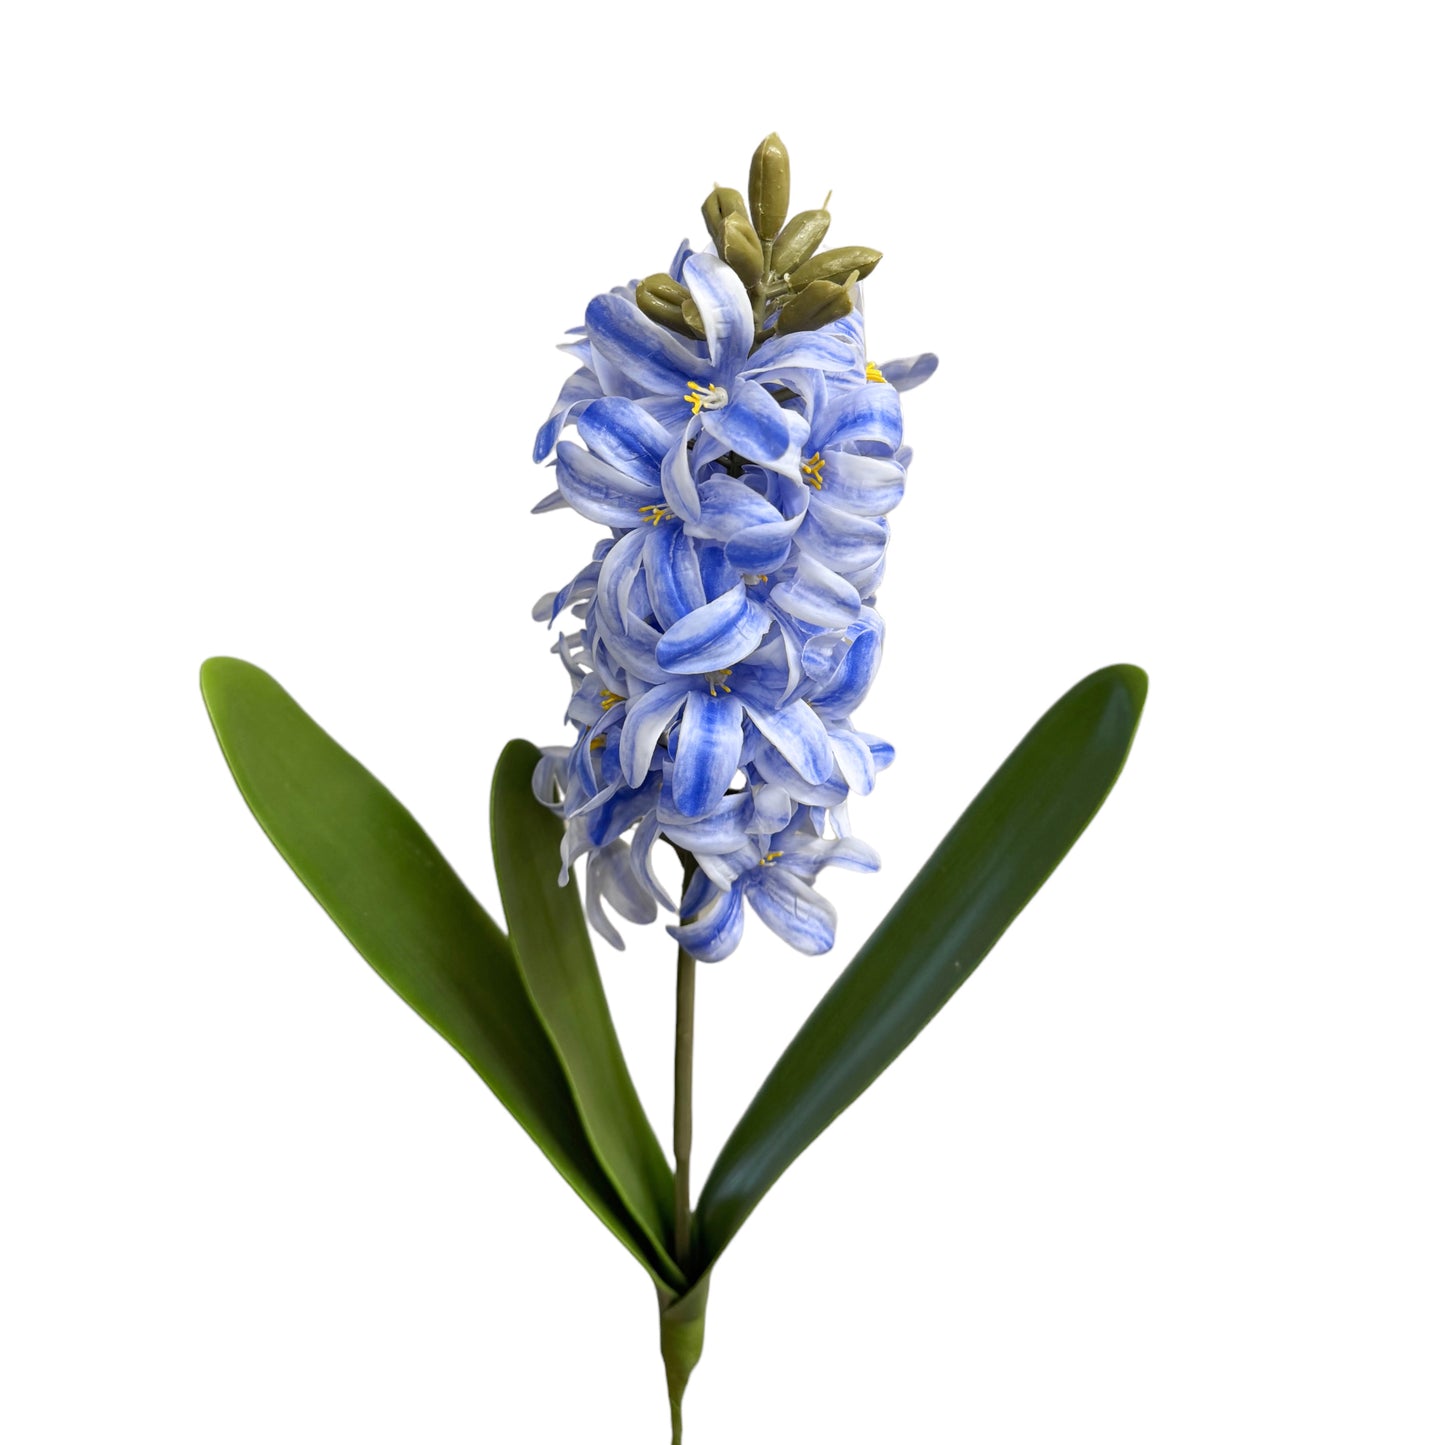 Artificial Hyacinth Flower Stems - 16" with Triple Leaf Design, Varied Hues